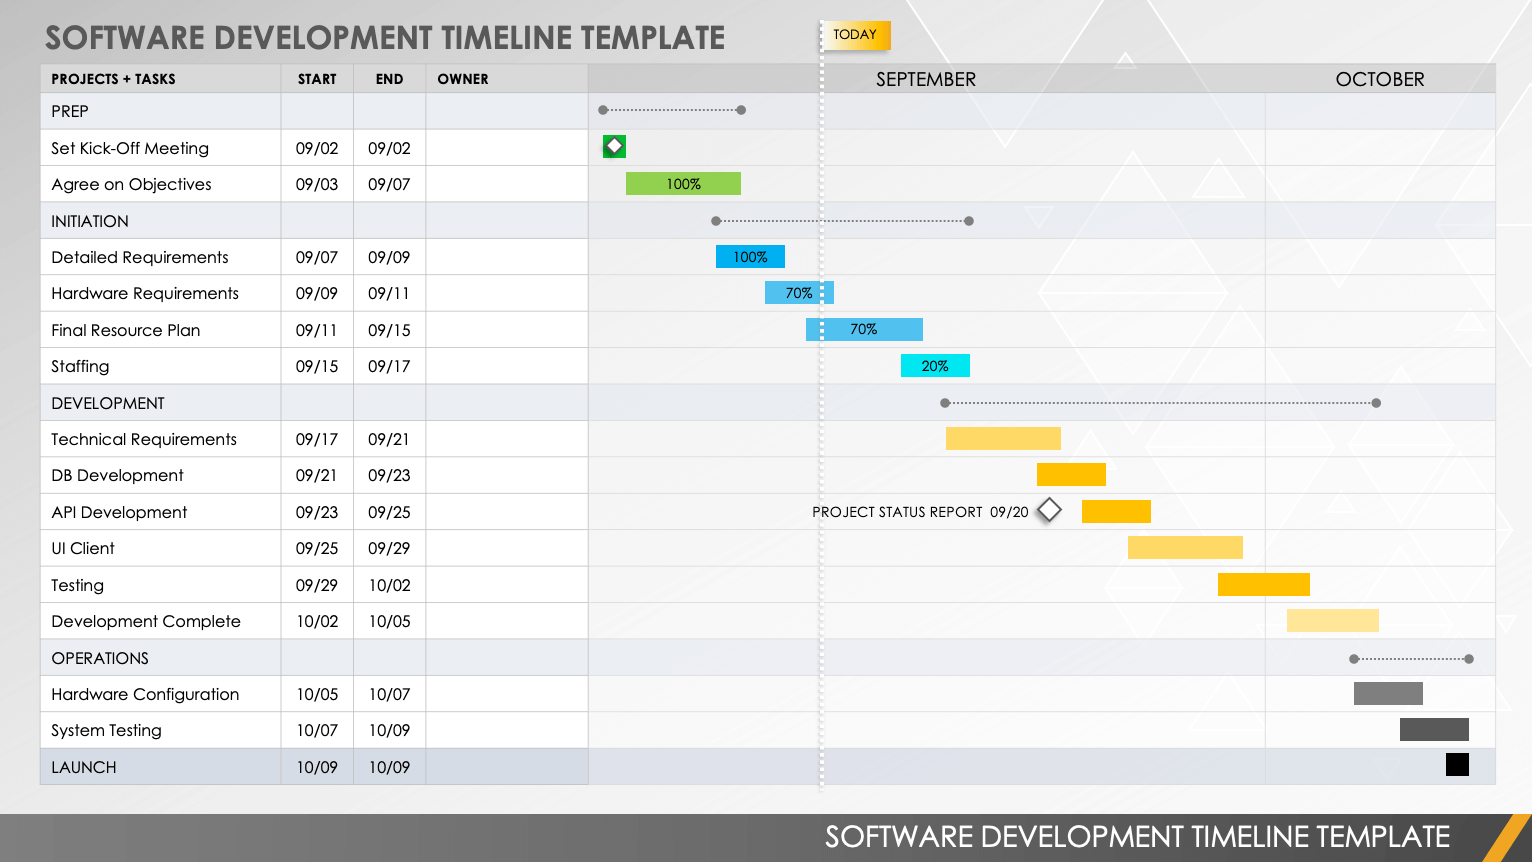 Software Development Timeline Template PowerPoint